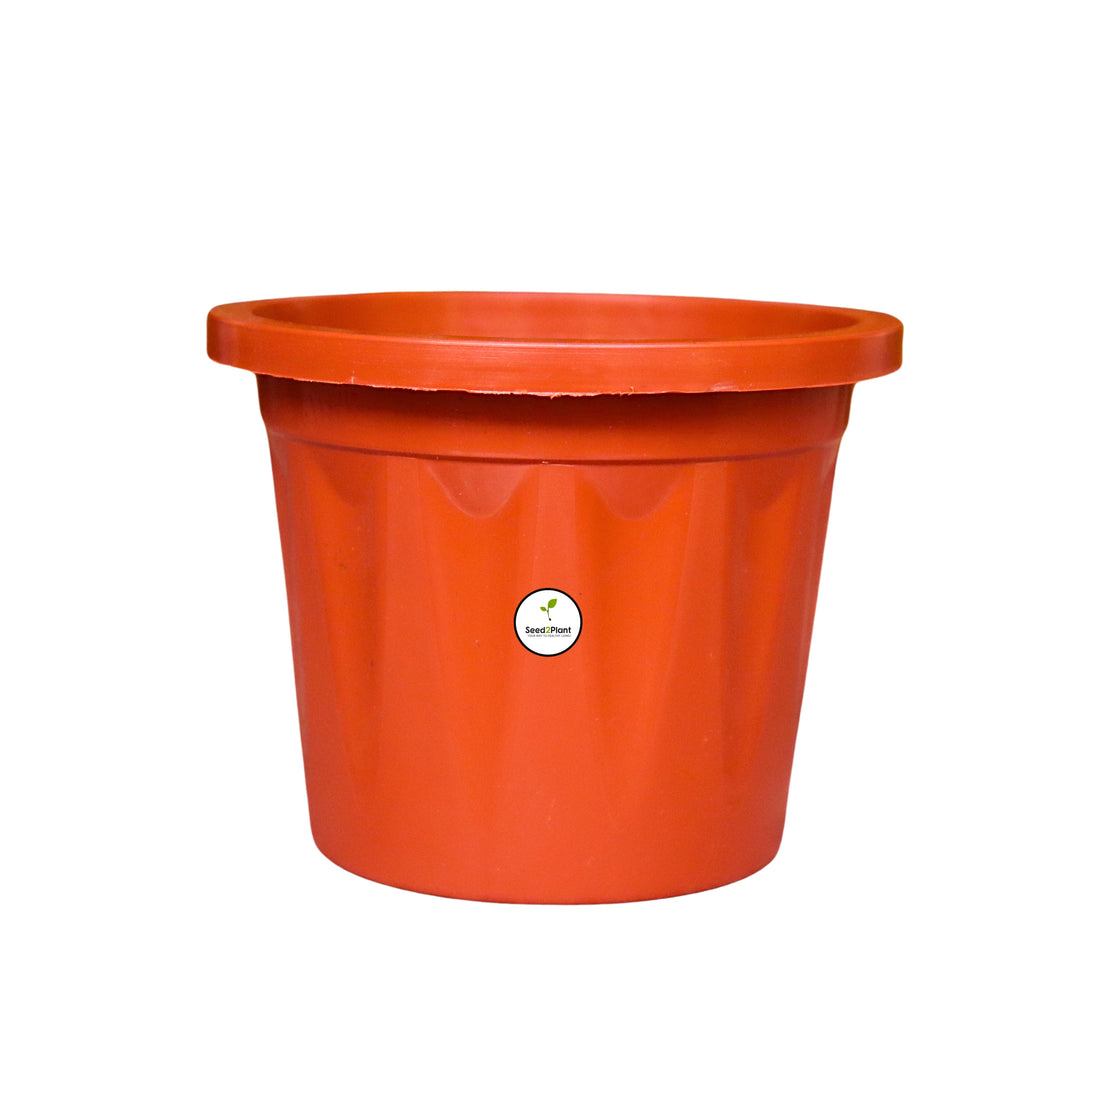 5 Inch Plastic Pot / Planter - Terracotta Colour